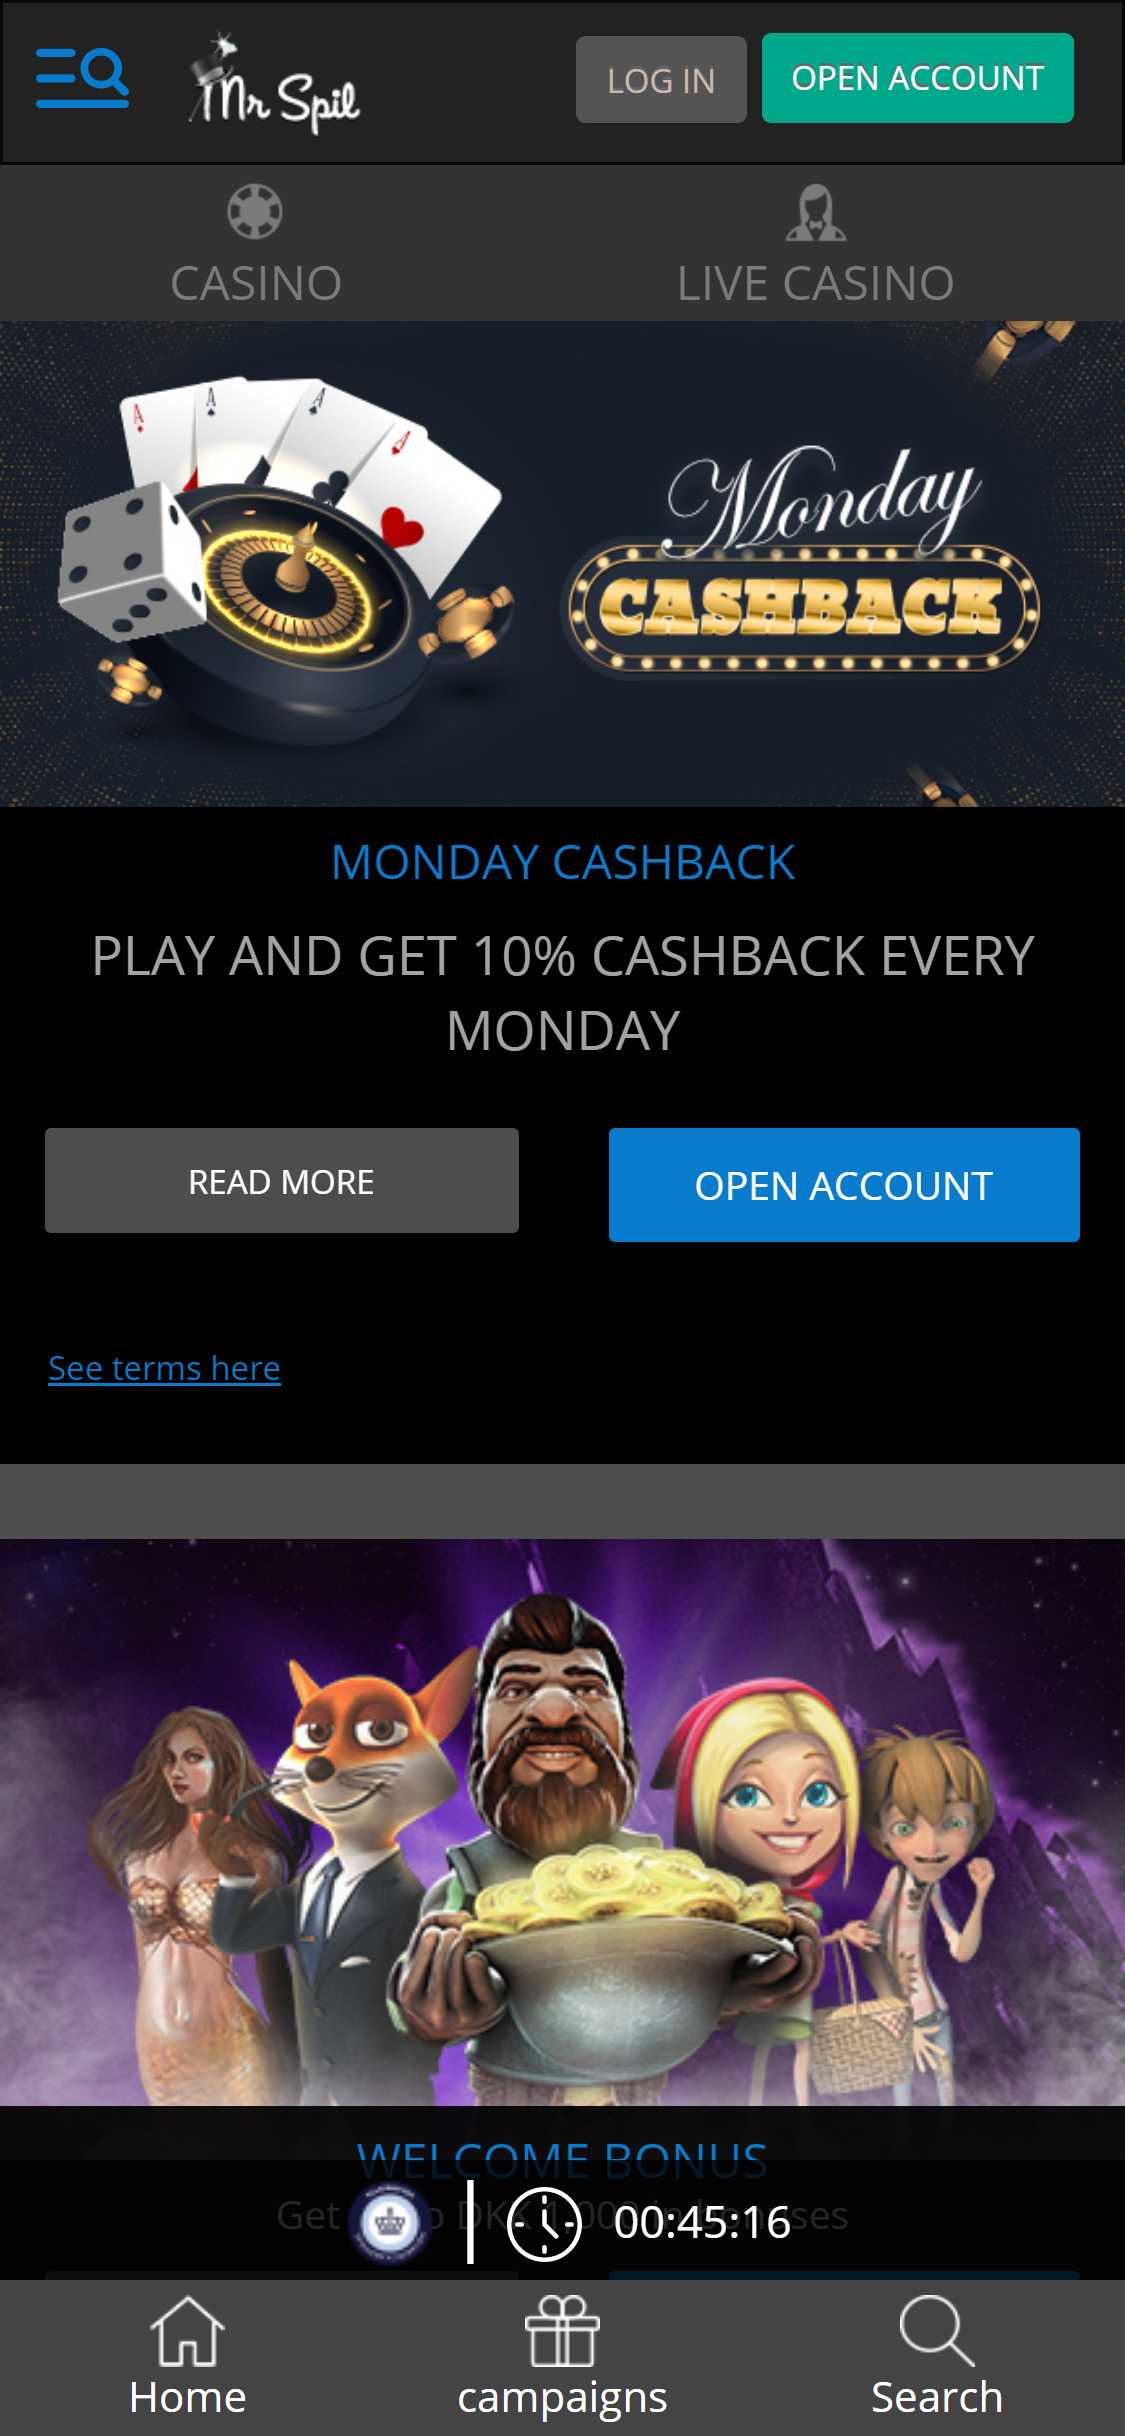 Mr Spil Casino DK Mobile No Deposit Bonus Review